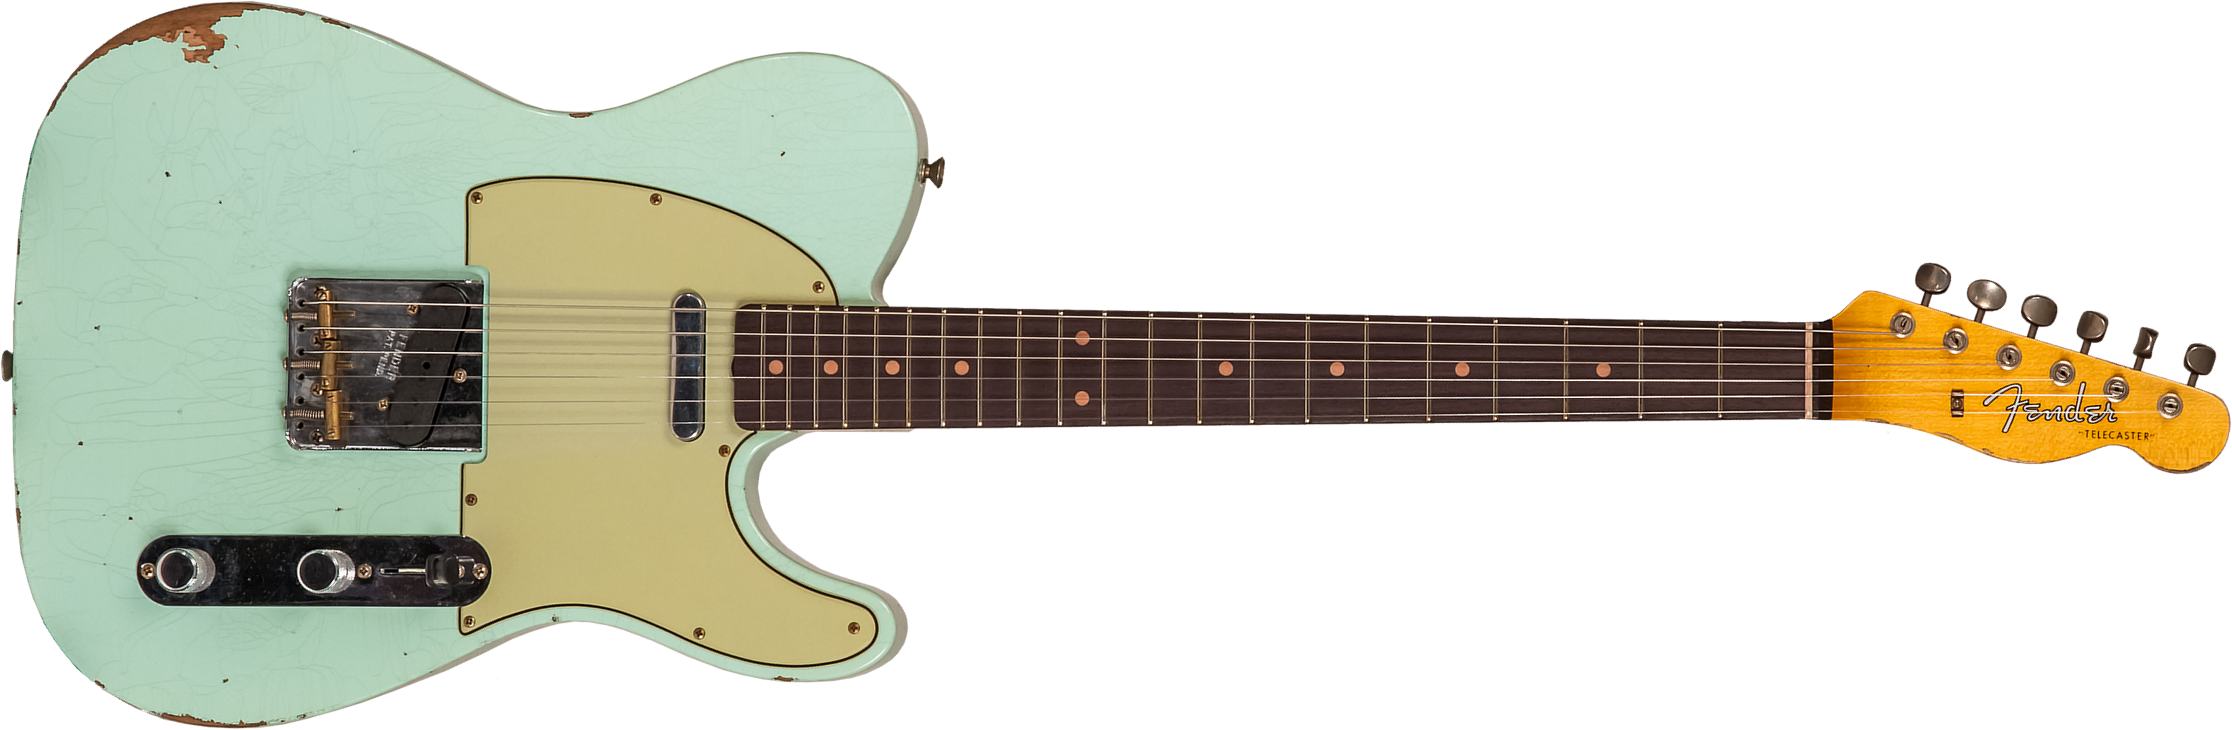 Fender Custom Shop Tele 1961 2s Ht Rw #cz565334 - Relic Faded Surf Green - Televorm elektrische gitaar - Main picture